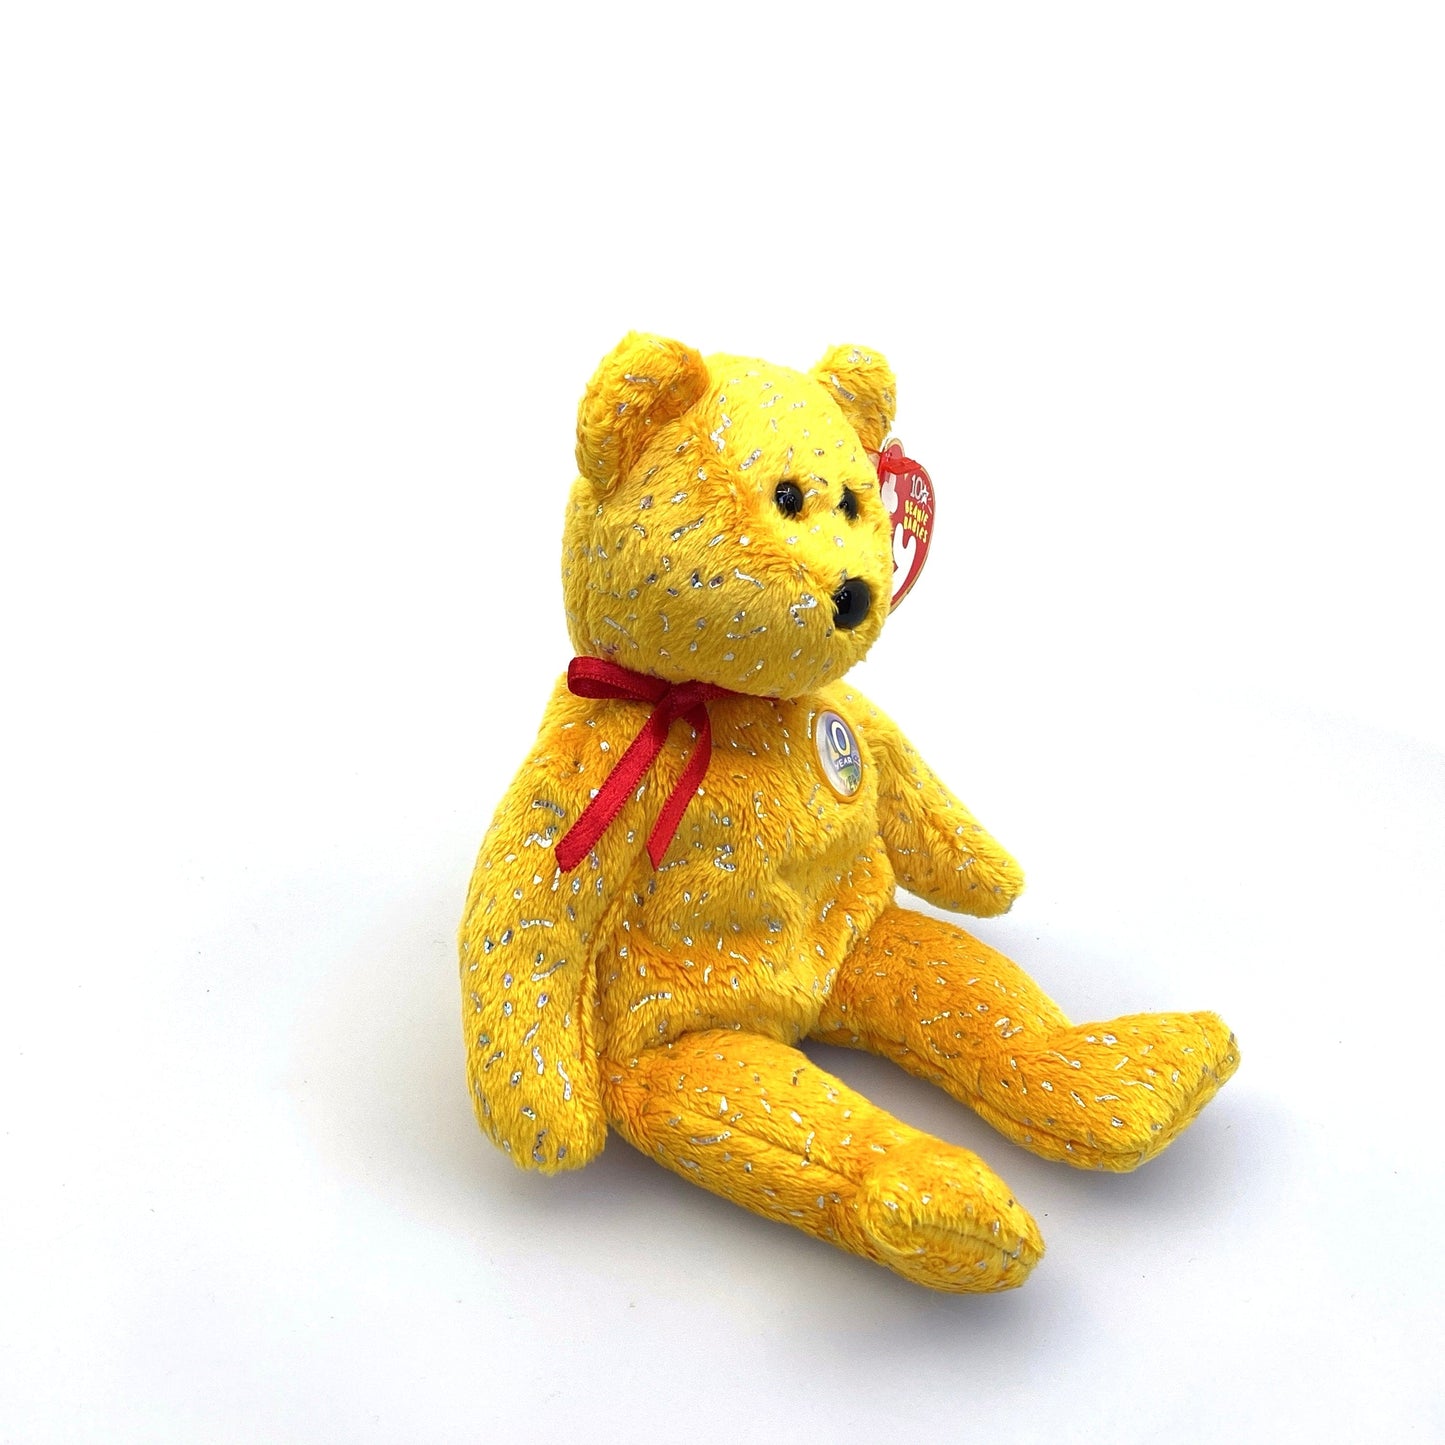 Charming Ty Original Beanie Babies Decade the Bear Plush Toy - Vintage